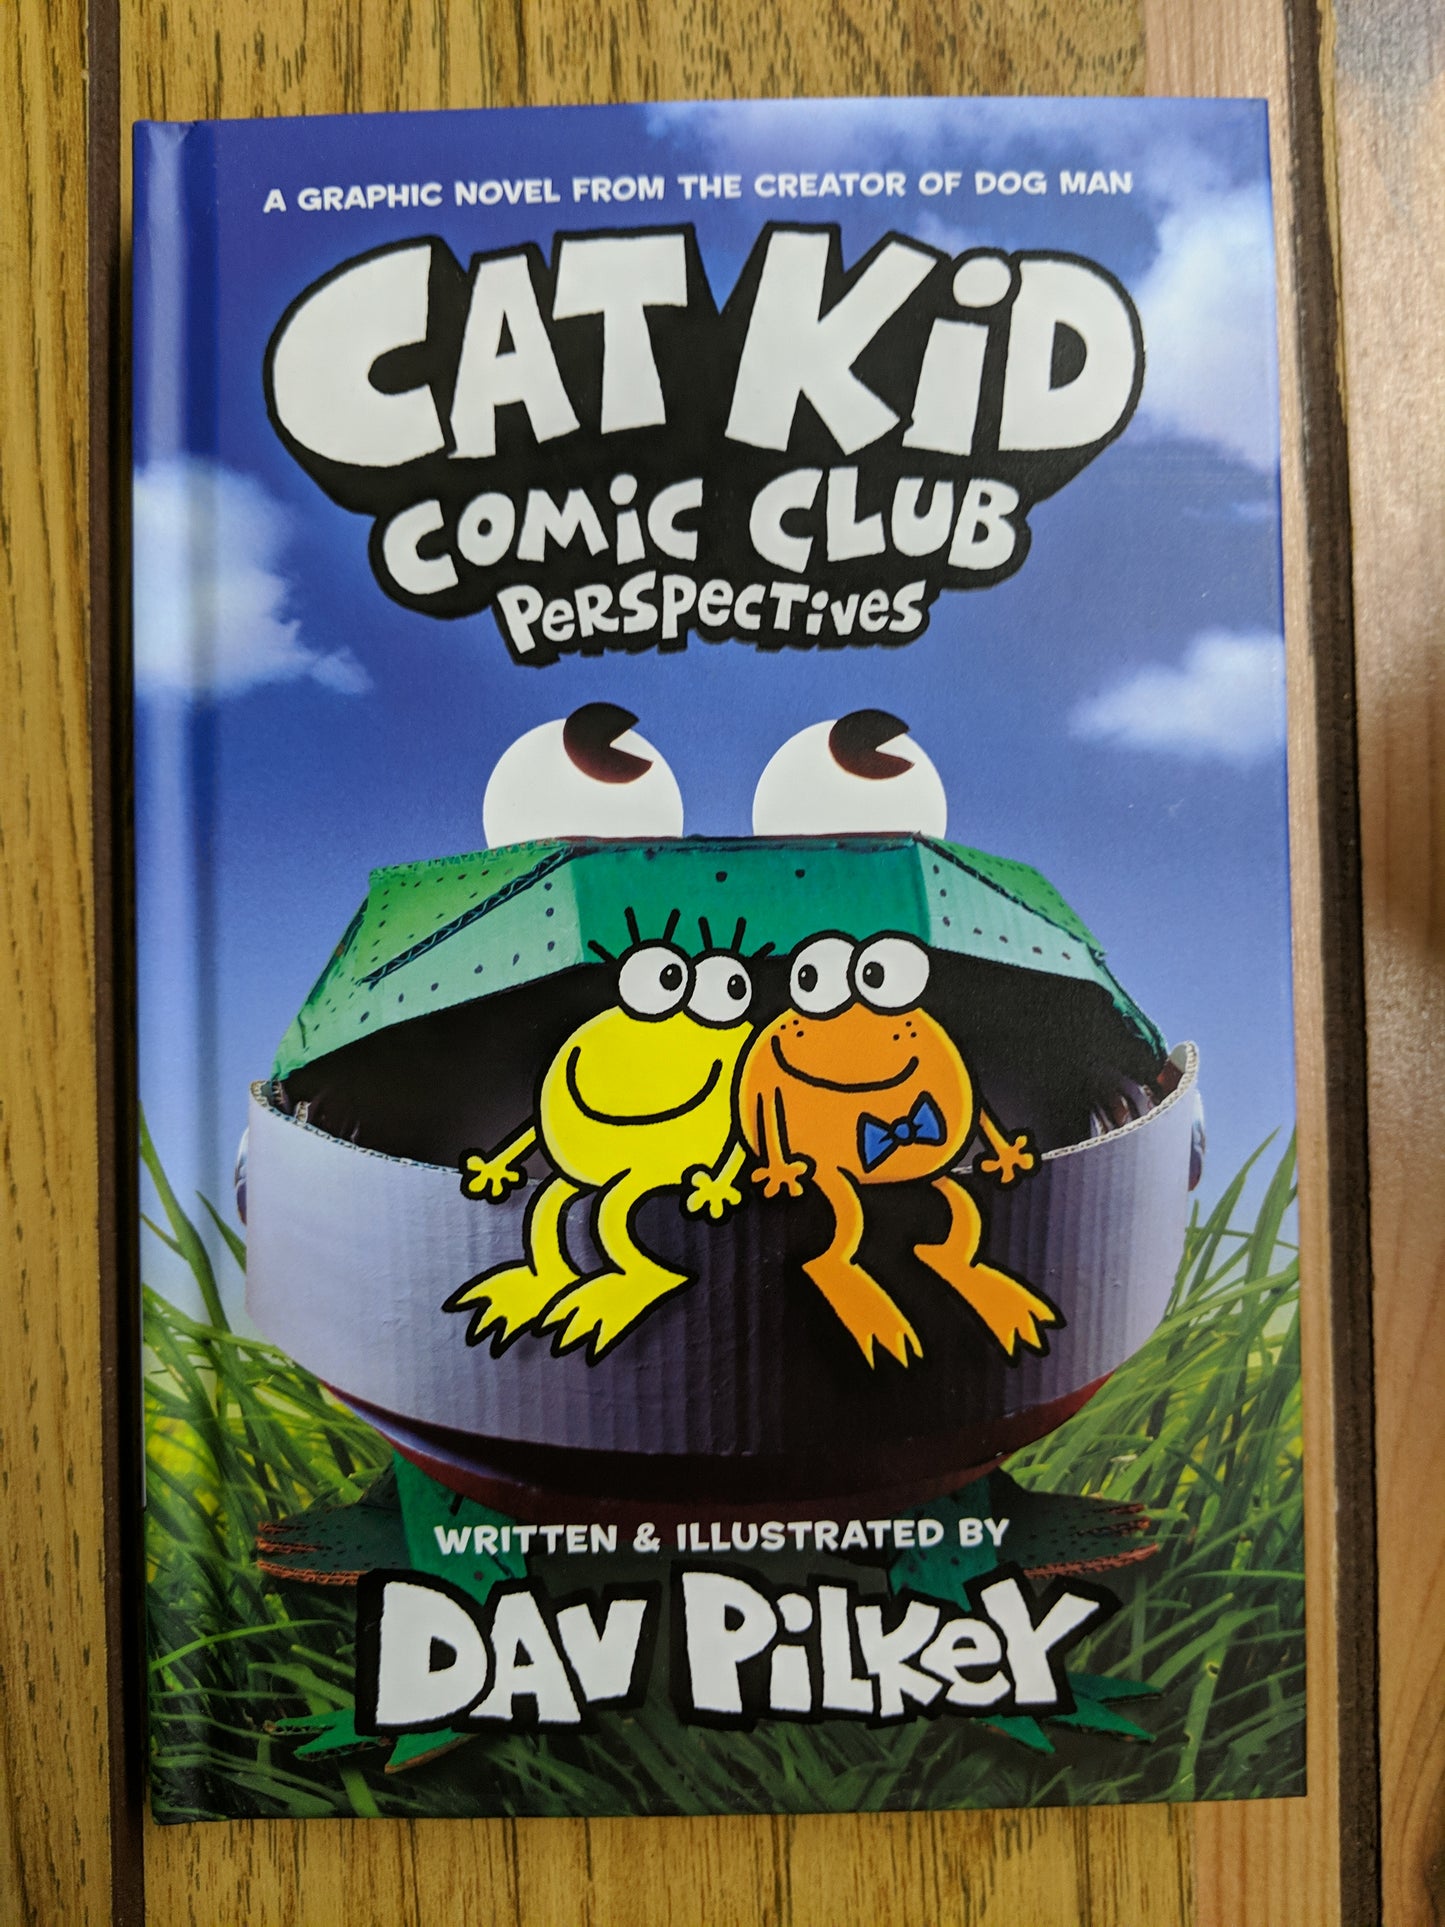 Cat Kid Comic Club: Perspectives (#2)